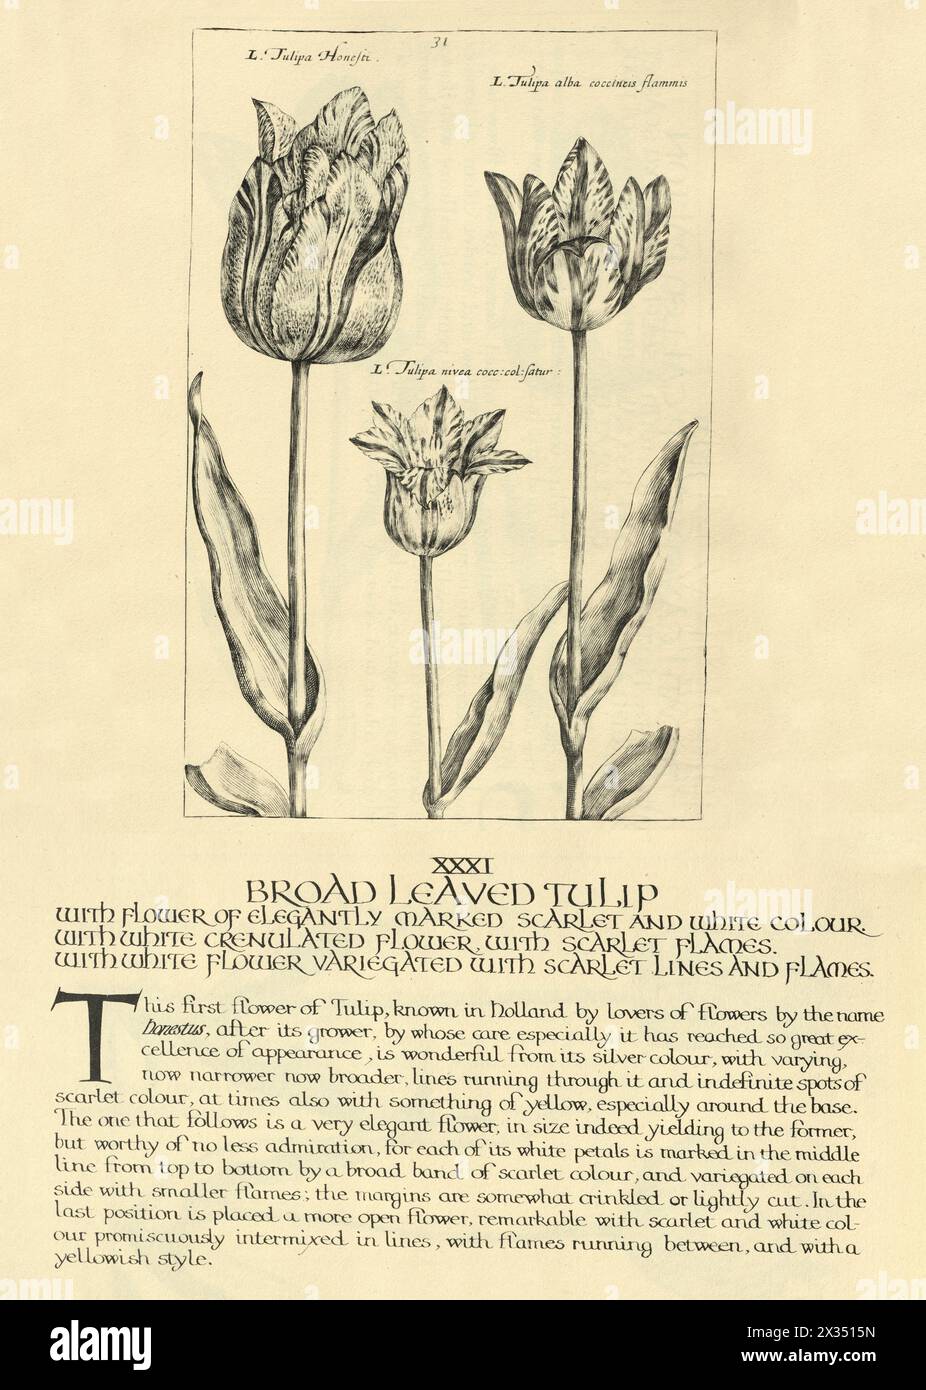 Botanical art print of broad leaved tulip, from Hortus Floridus by Crispin de Passe, Vintage illustration, 17th Century Stock Photo